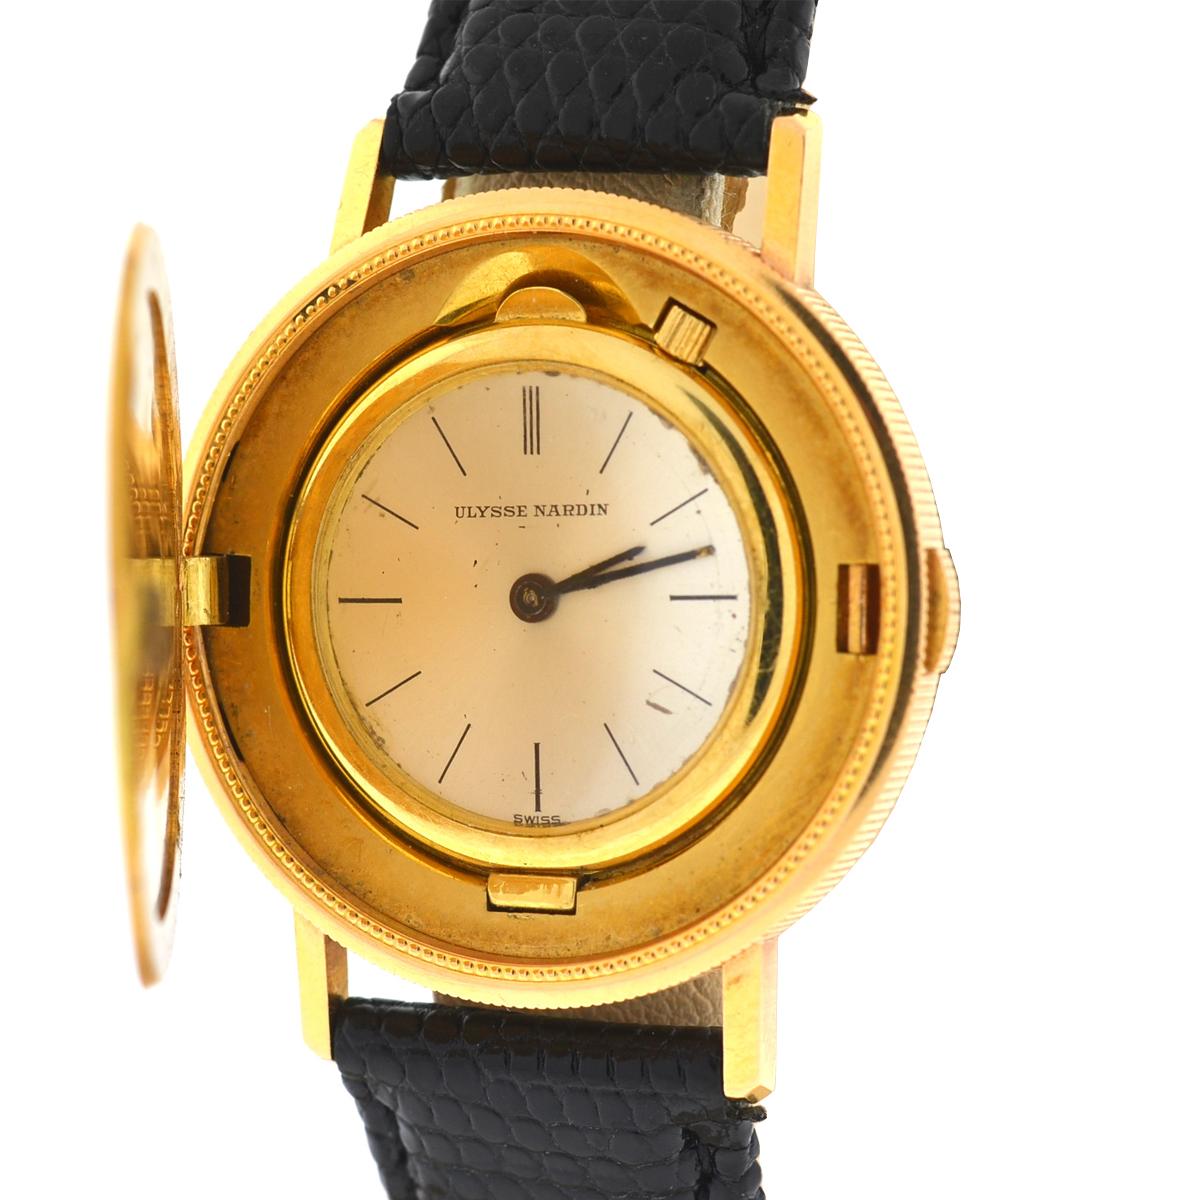 Ulysse Nardin 18 Karat Yellow Gold Manual Winding Coin Watch 1